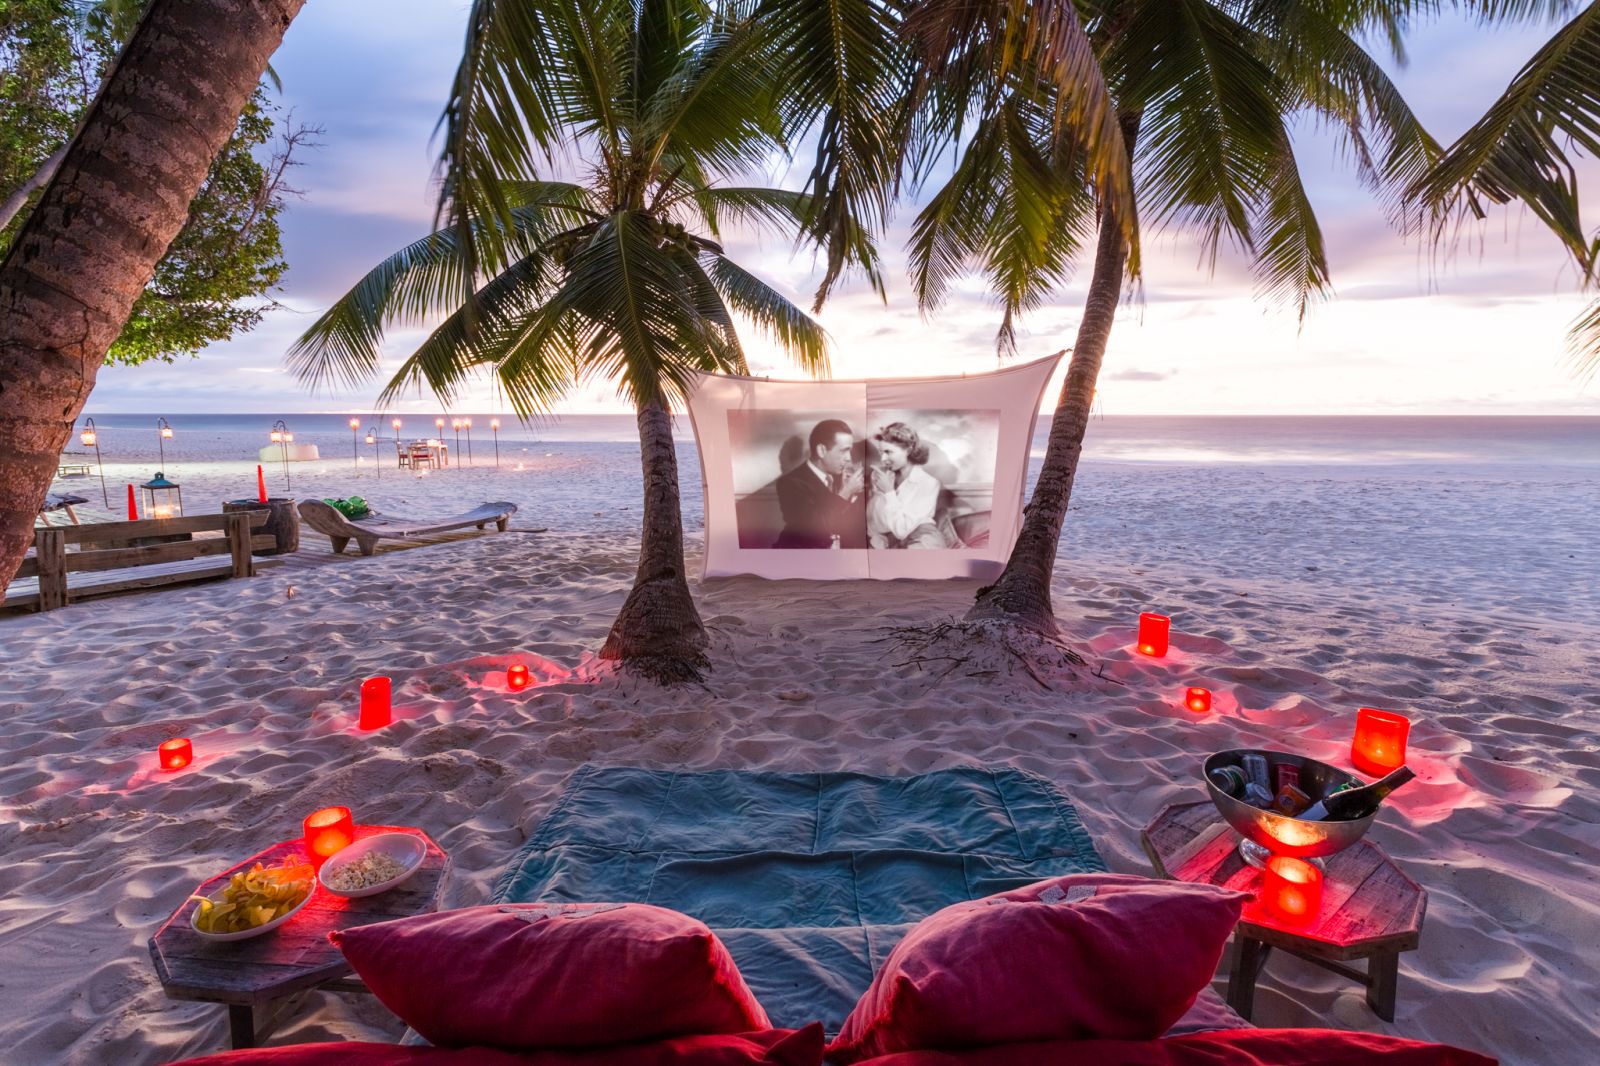 Open air beach cinema on North Island in the Seychelles